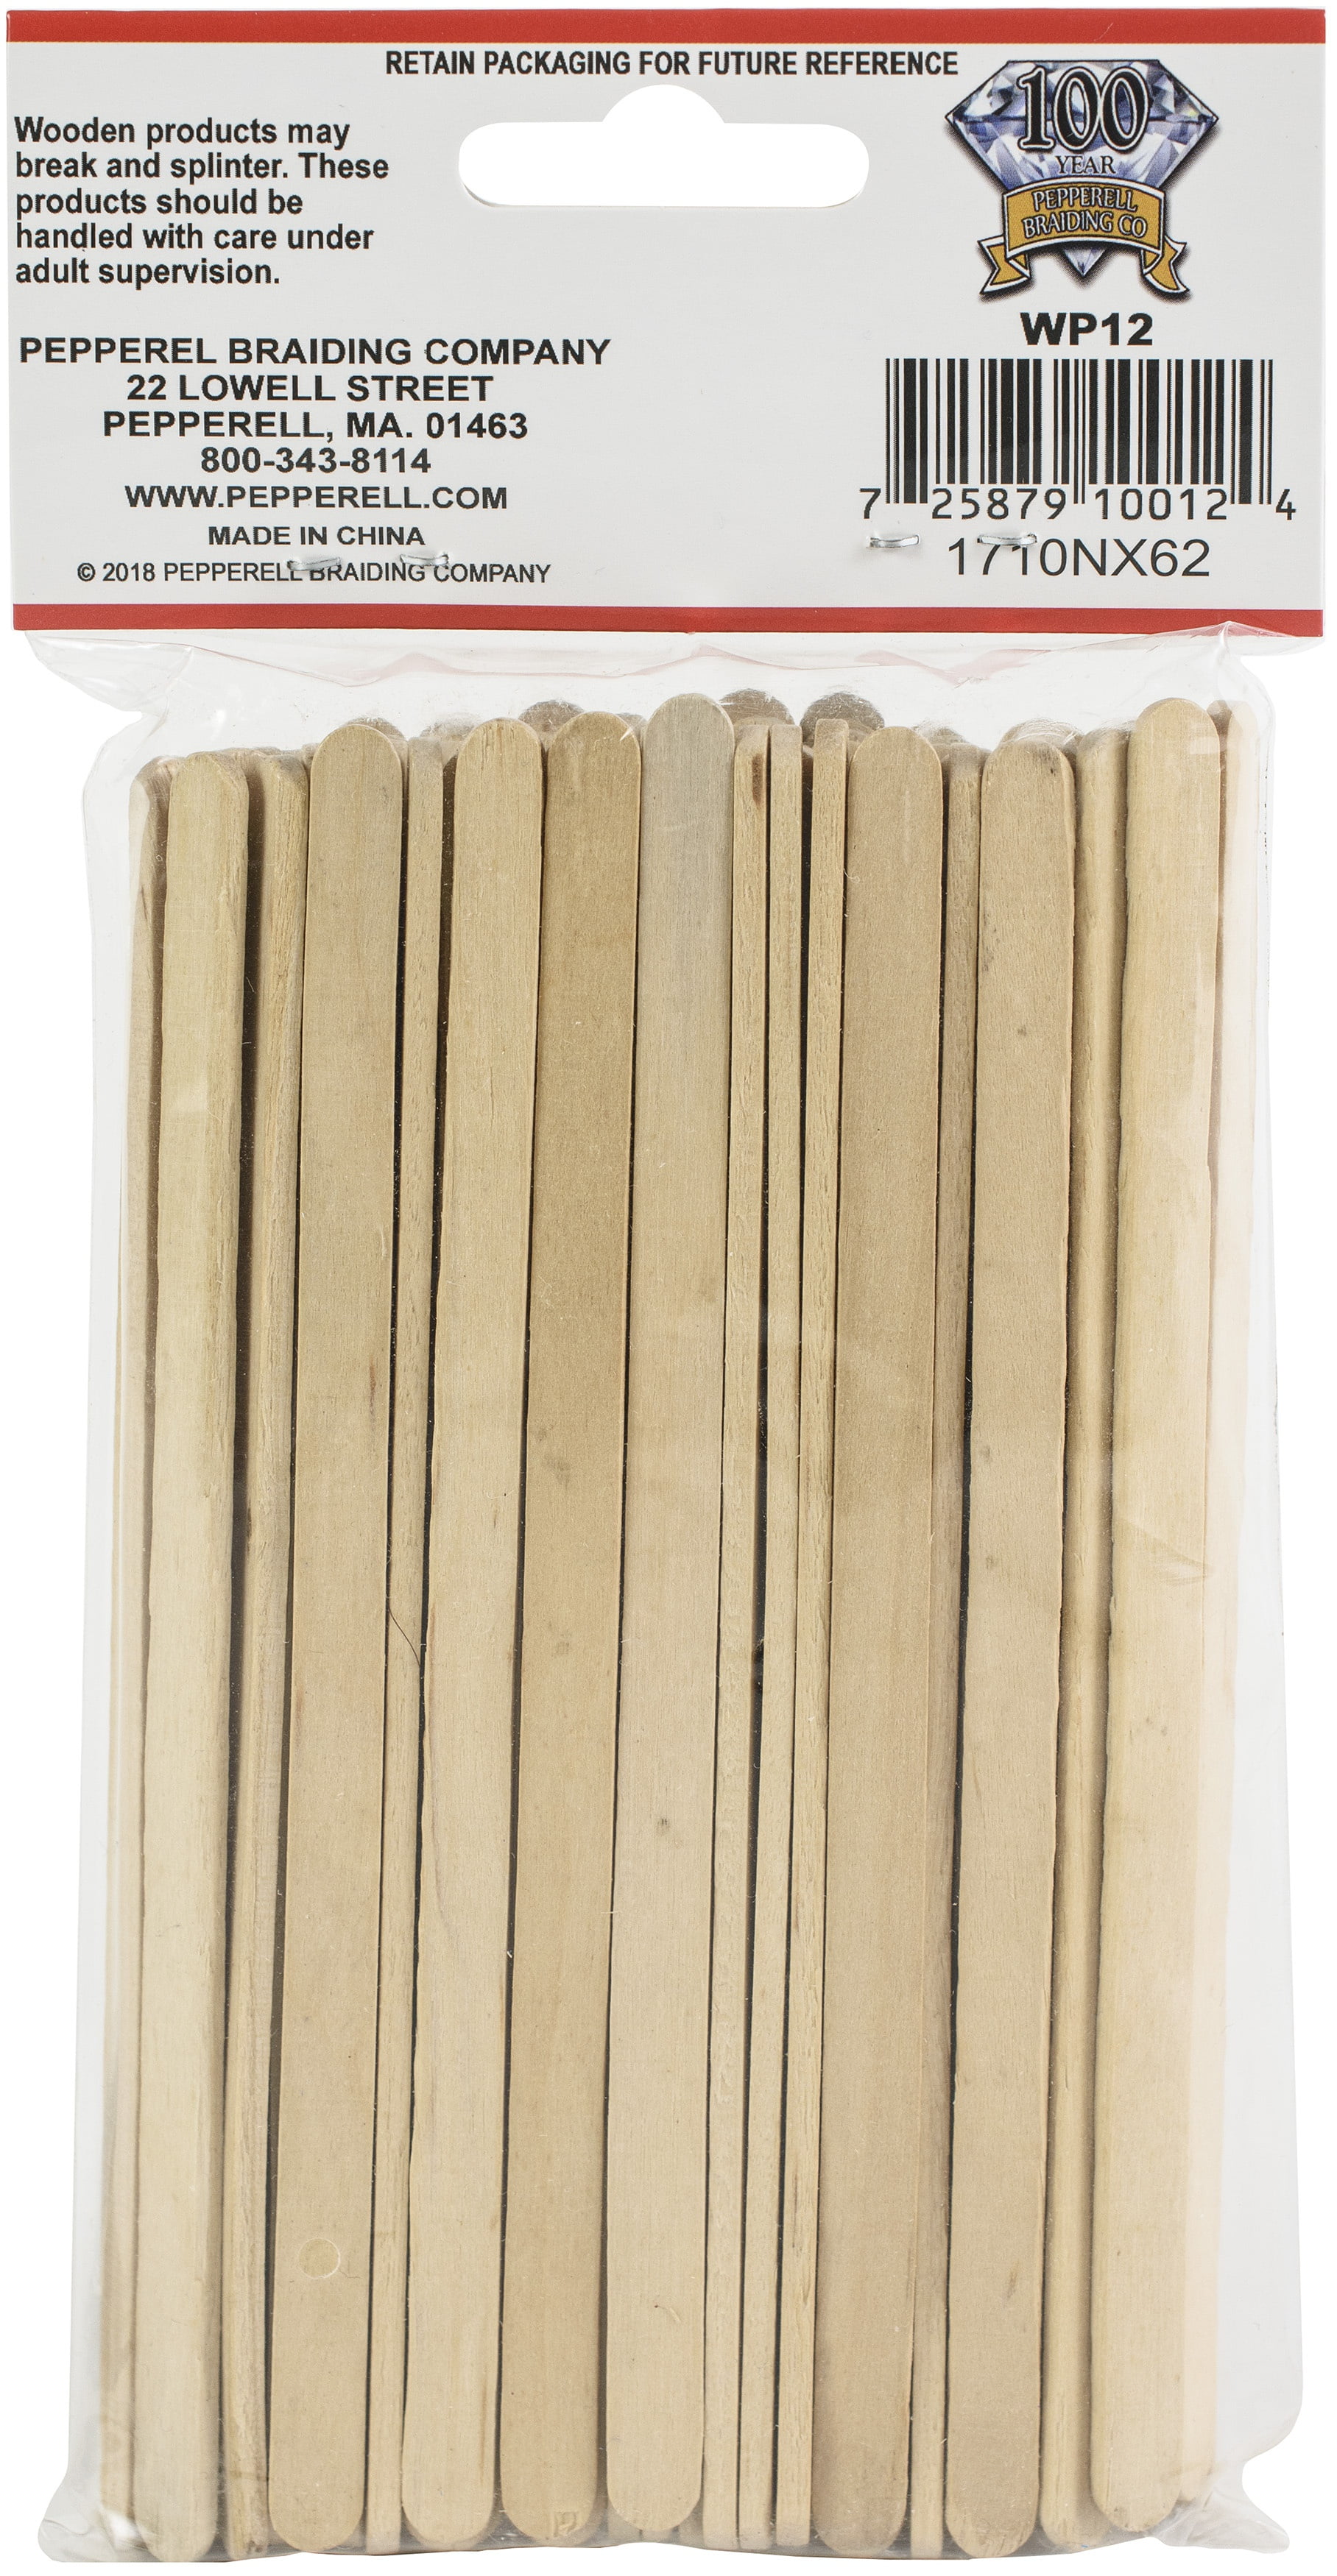 5.75 inch Wood Craft Sticks-45pc/pkg